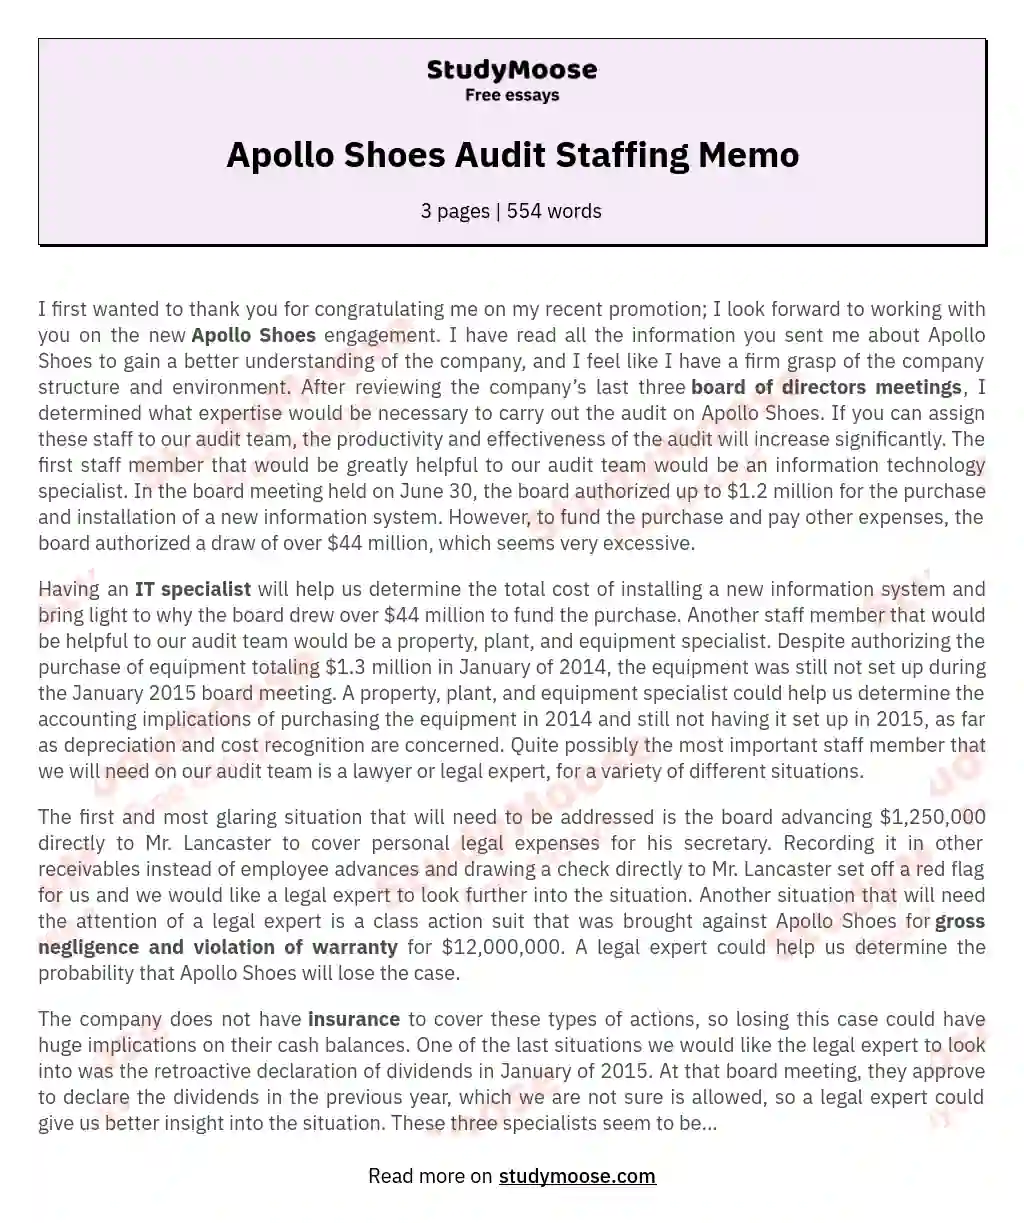 Apollo Shoes Audit Staffing Memo